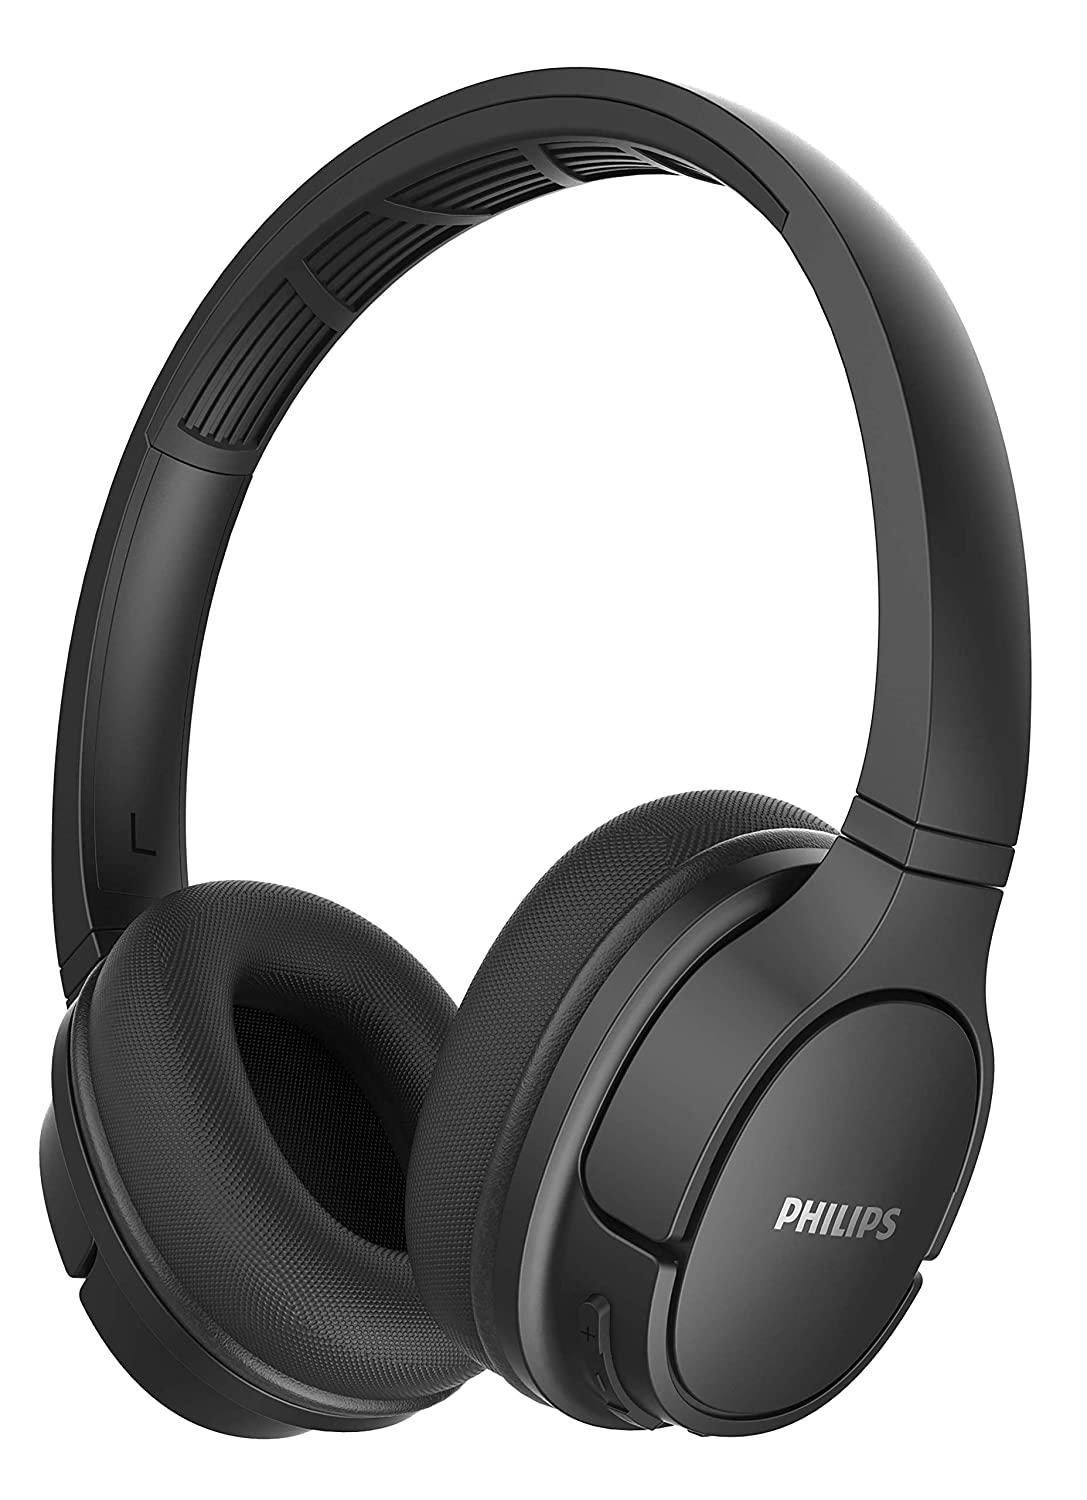 Philips Audios Actionfit Tash402Bk Bluetooth